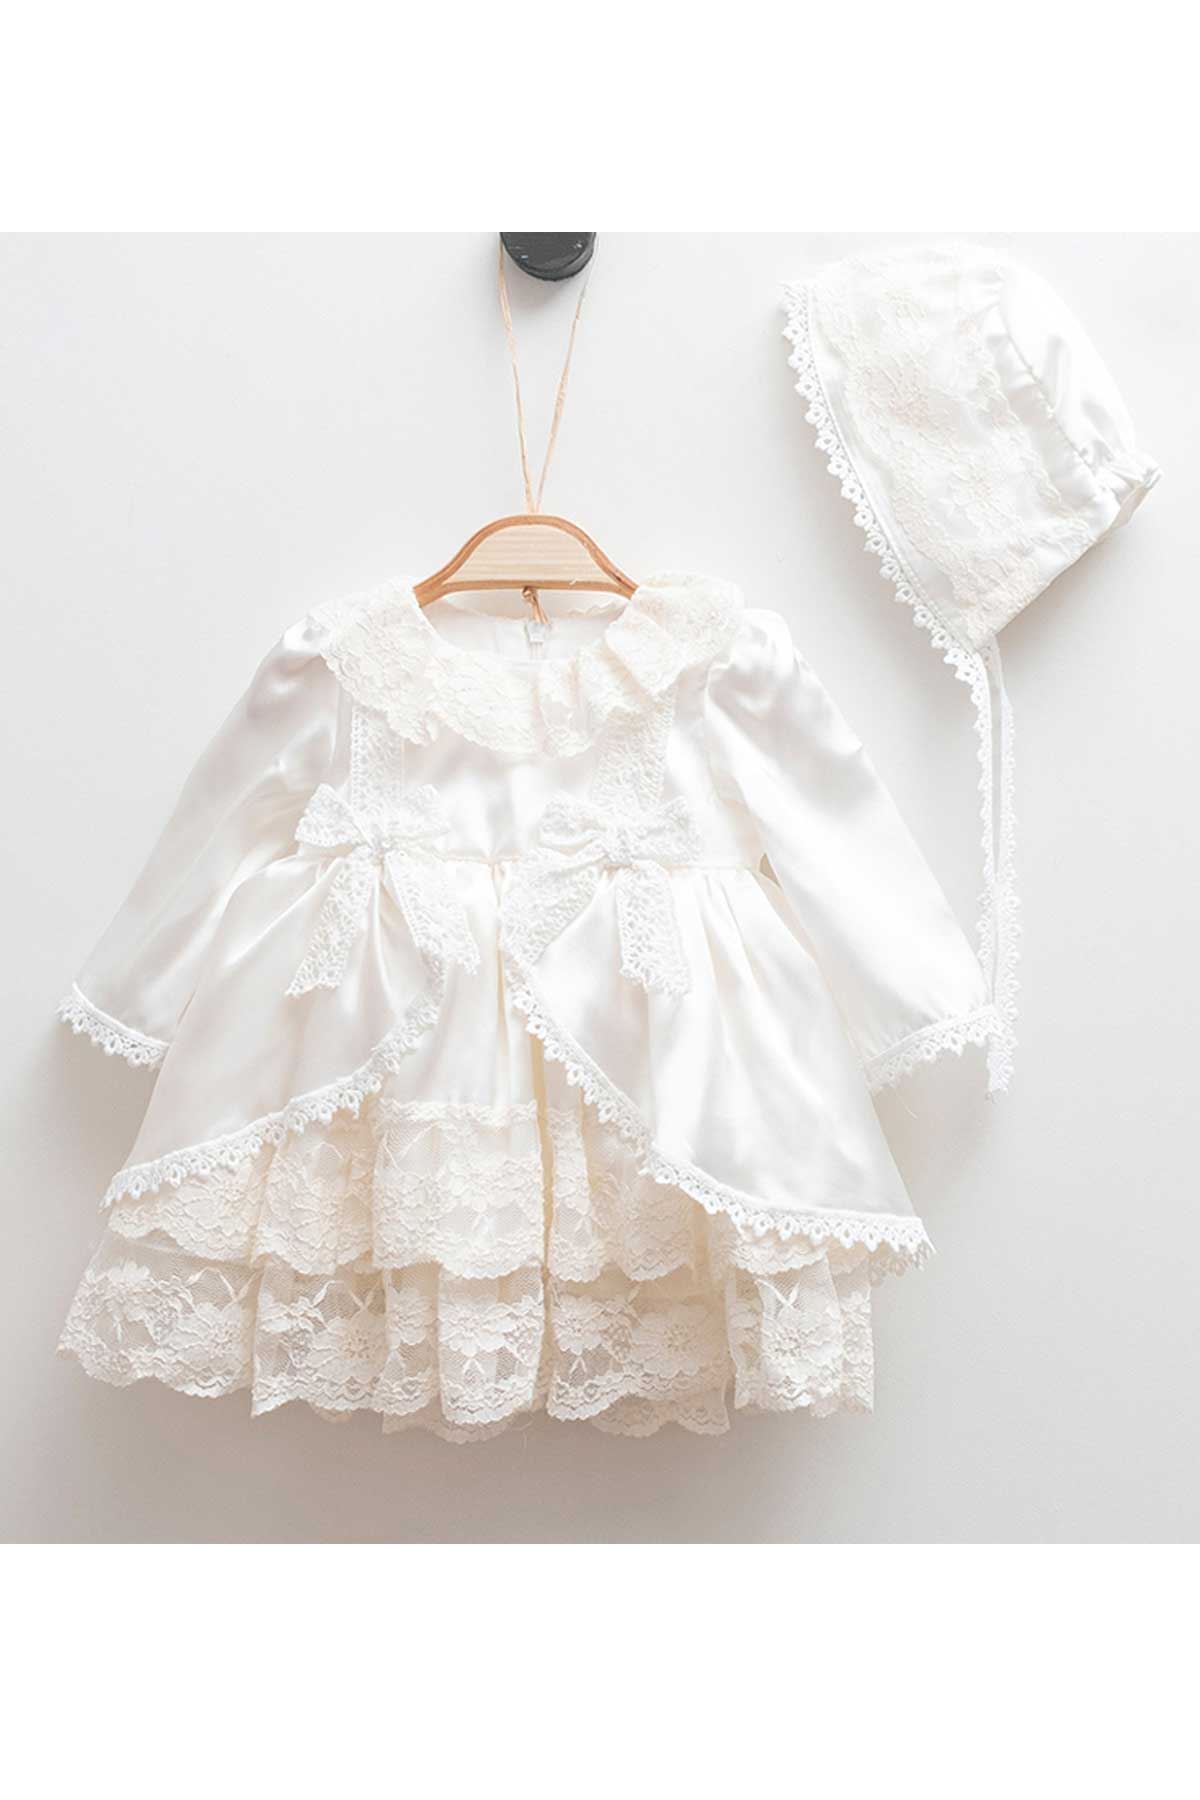 Krem Pelerin Dantel Kız Bebek Elbise Set